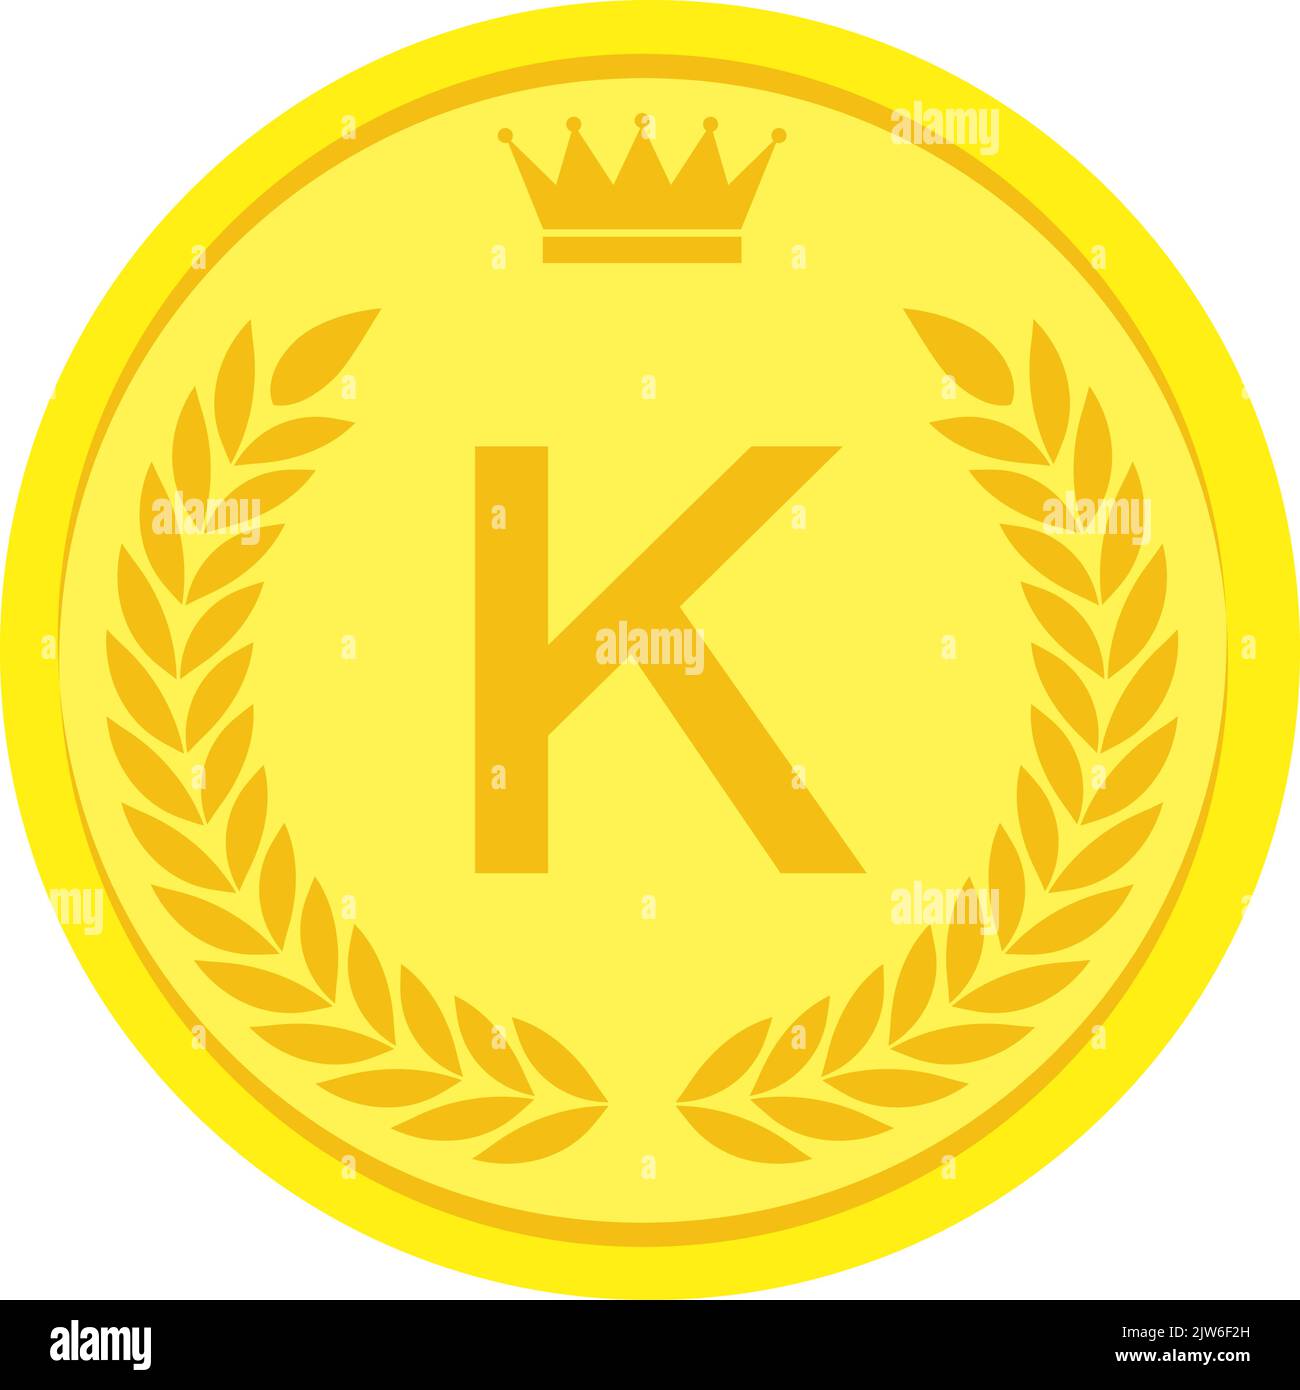 Laurel wreath and crown alphabet coins, K Stock Vector